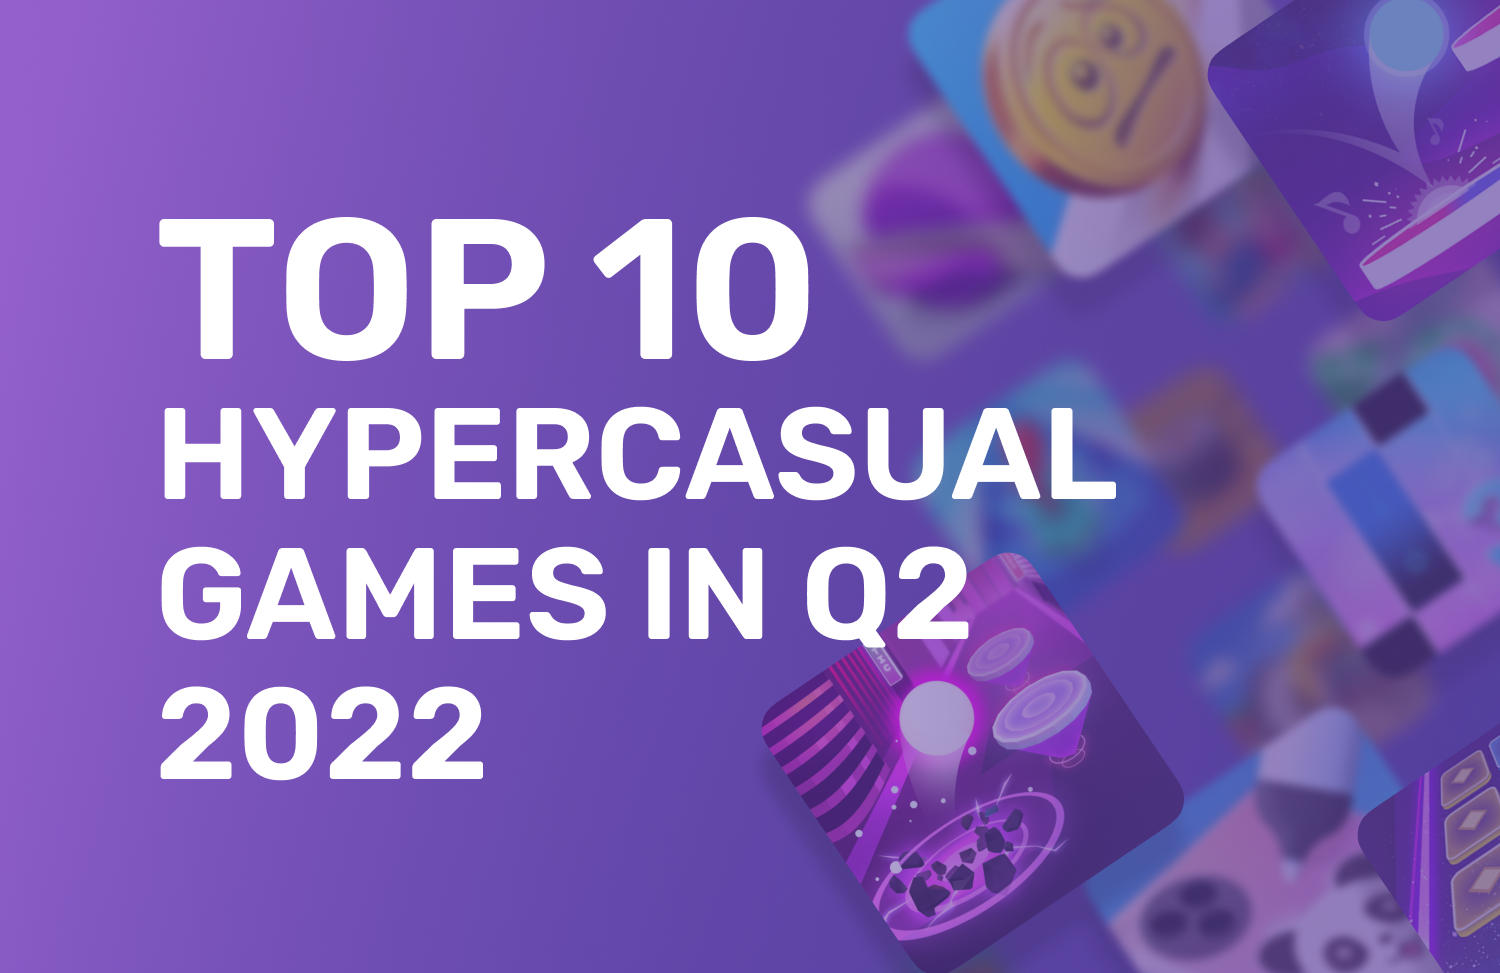 Top 10 hyper-casual games in Q2 2022